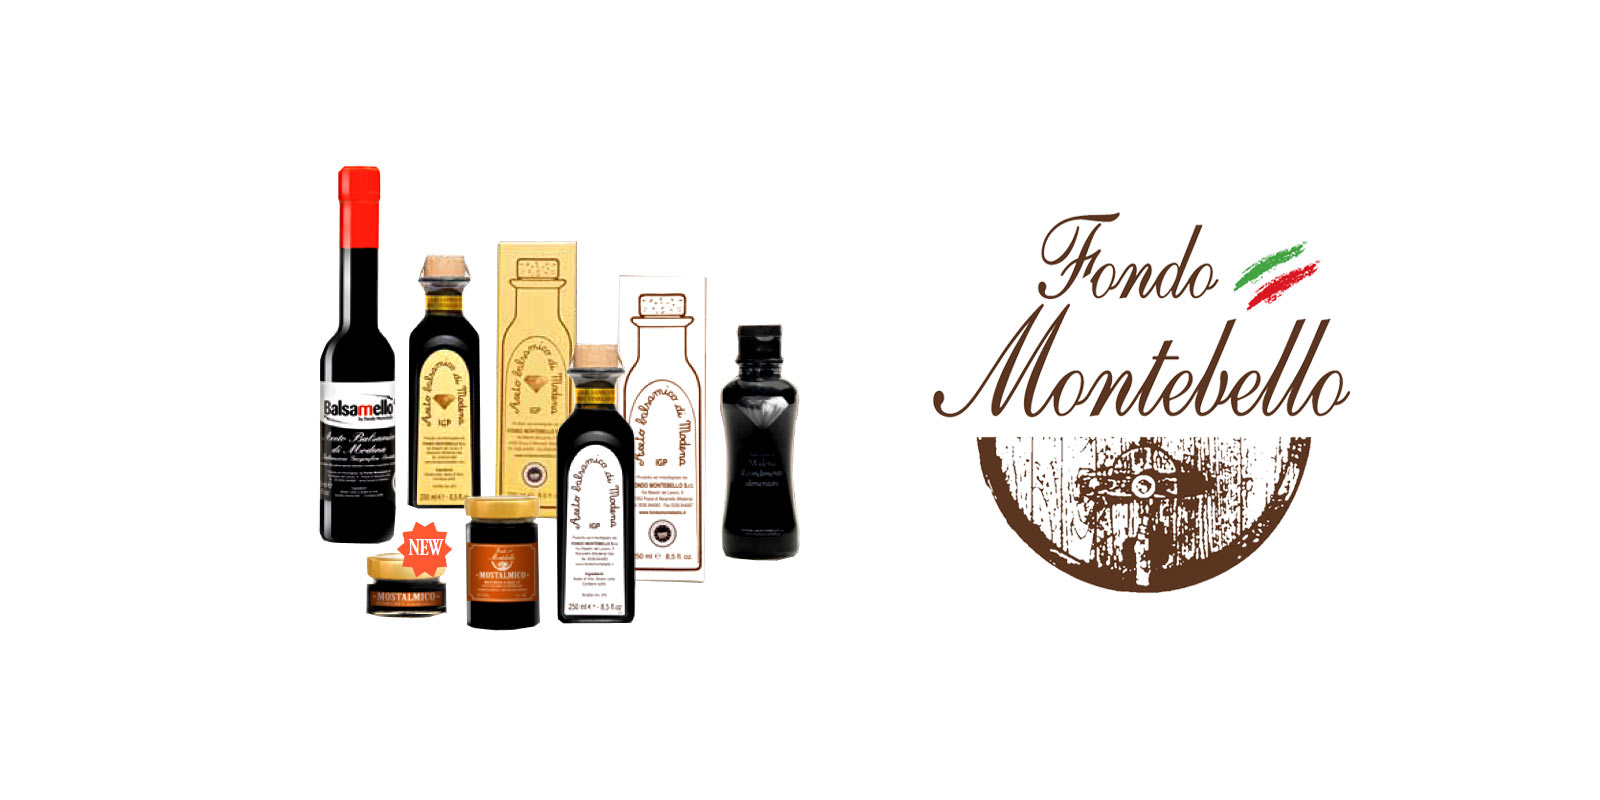 Aceto Balsamico Fondo Montebello Fondo Montebello pouziva stare a tradicni vyrobni postupy k vyrobe vynikajiciho balzamikoveho octa z oblasti Maranello v Italii.